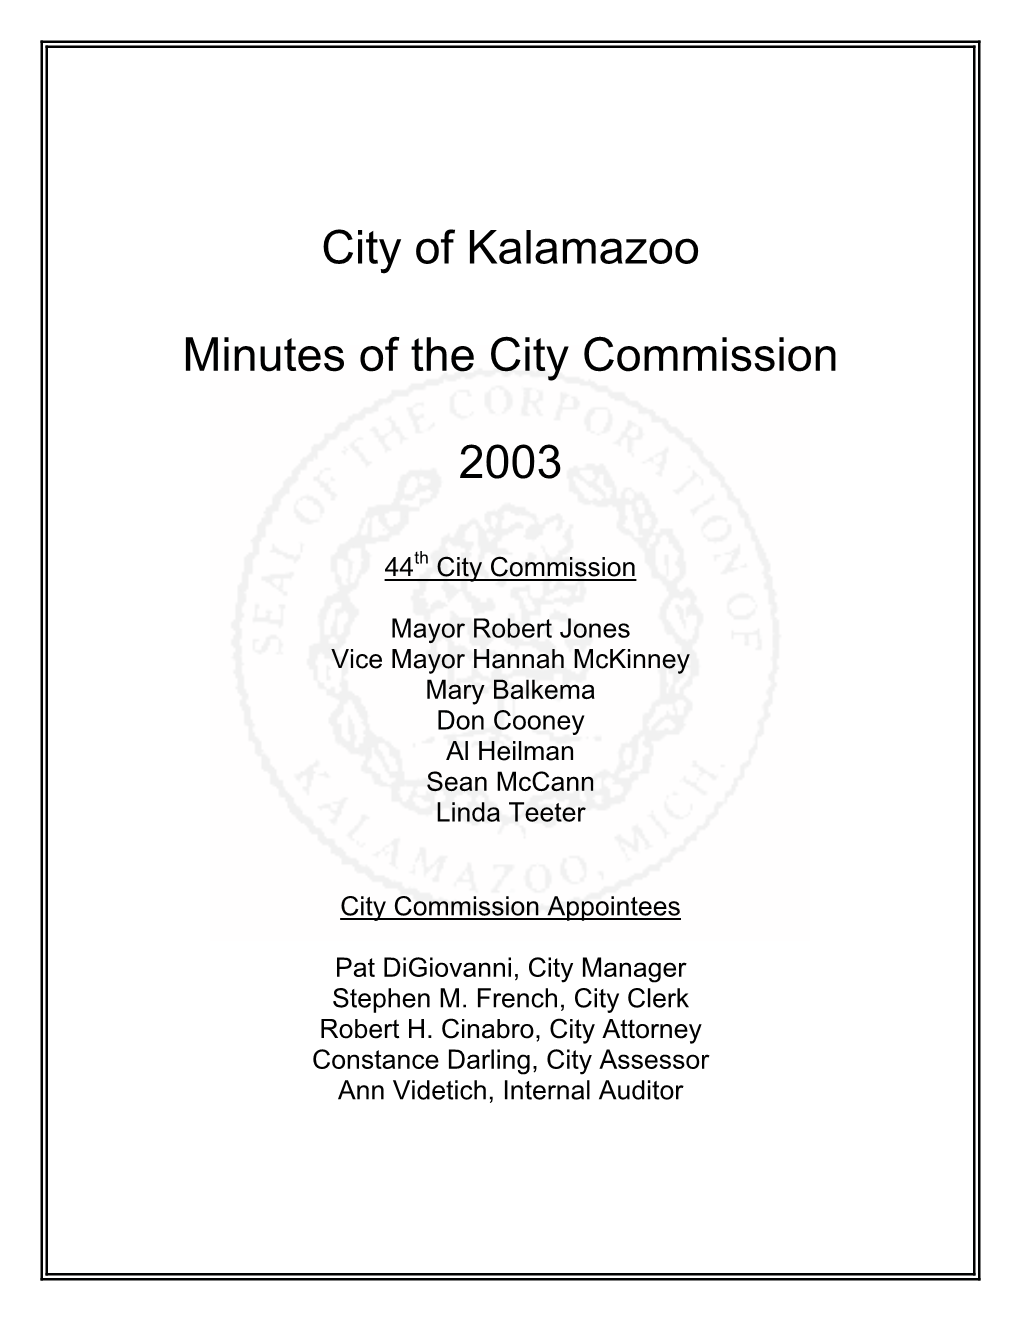 2003 City Commission Minutes